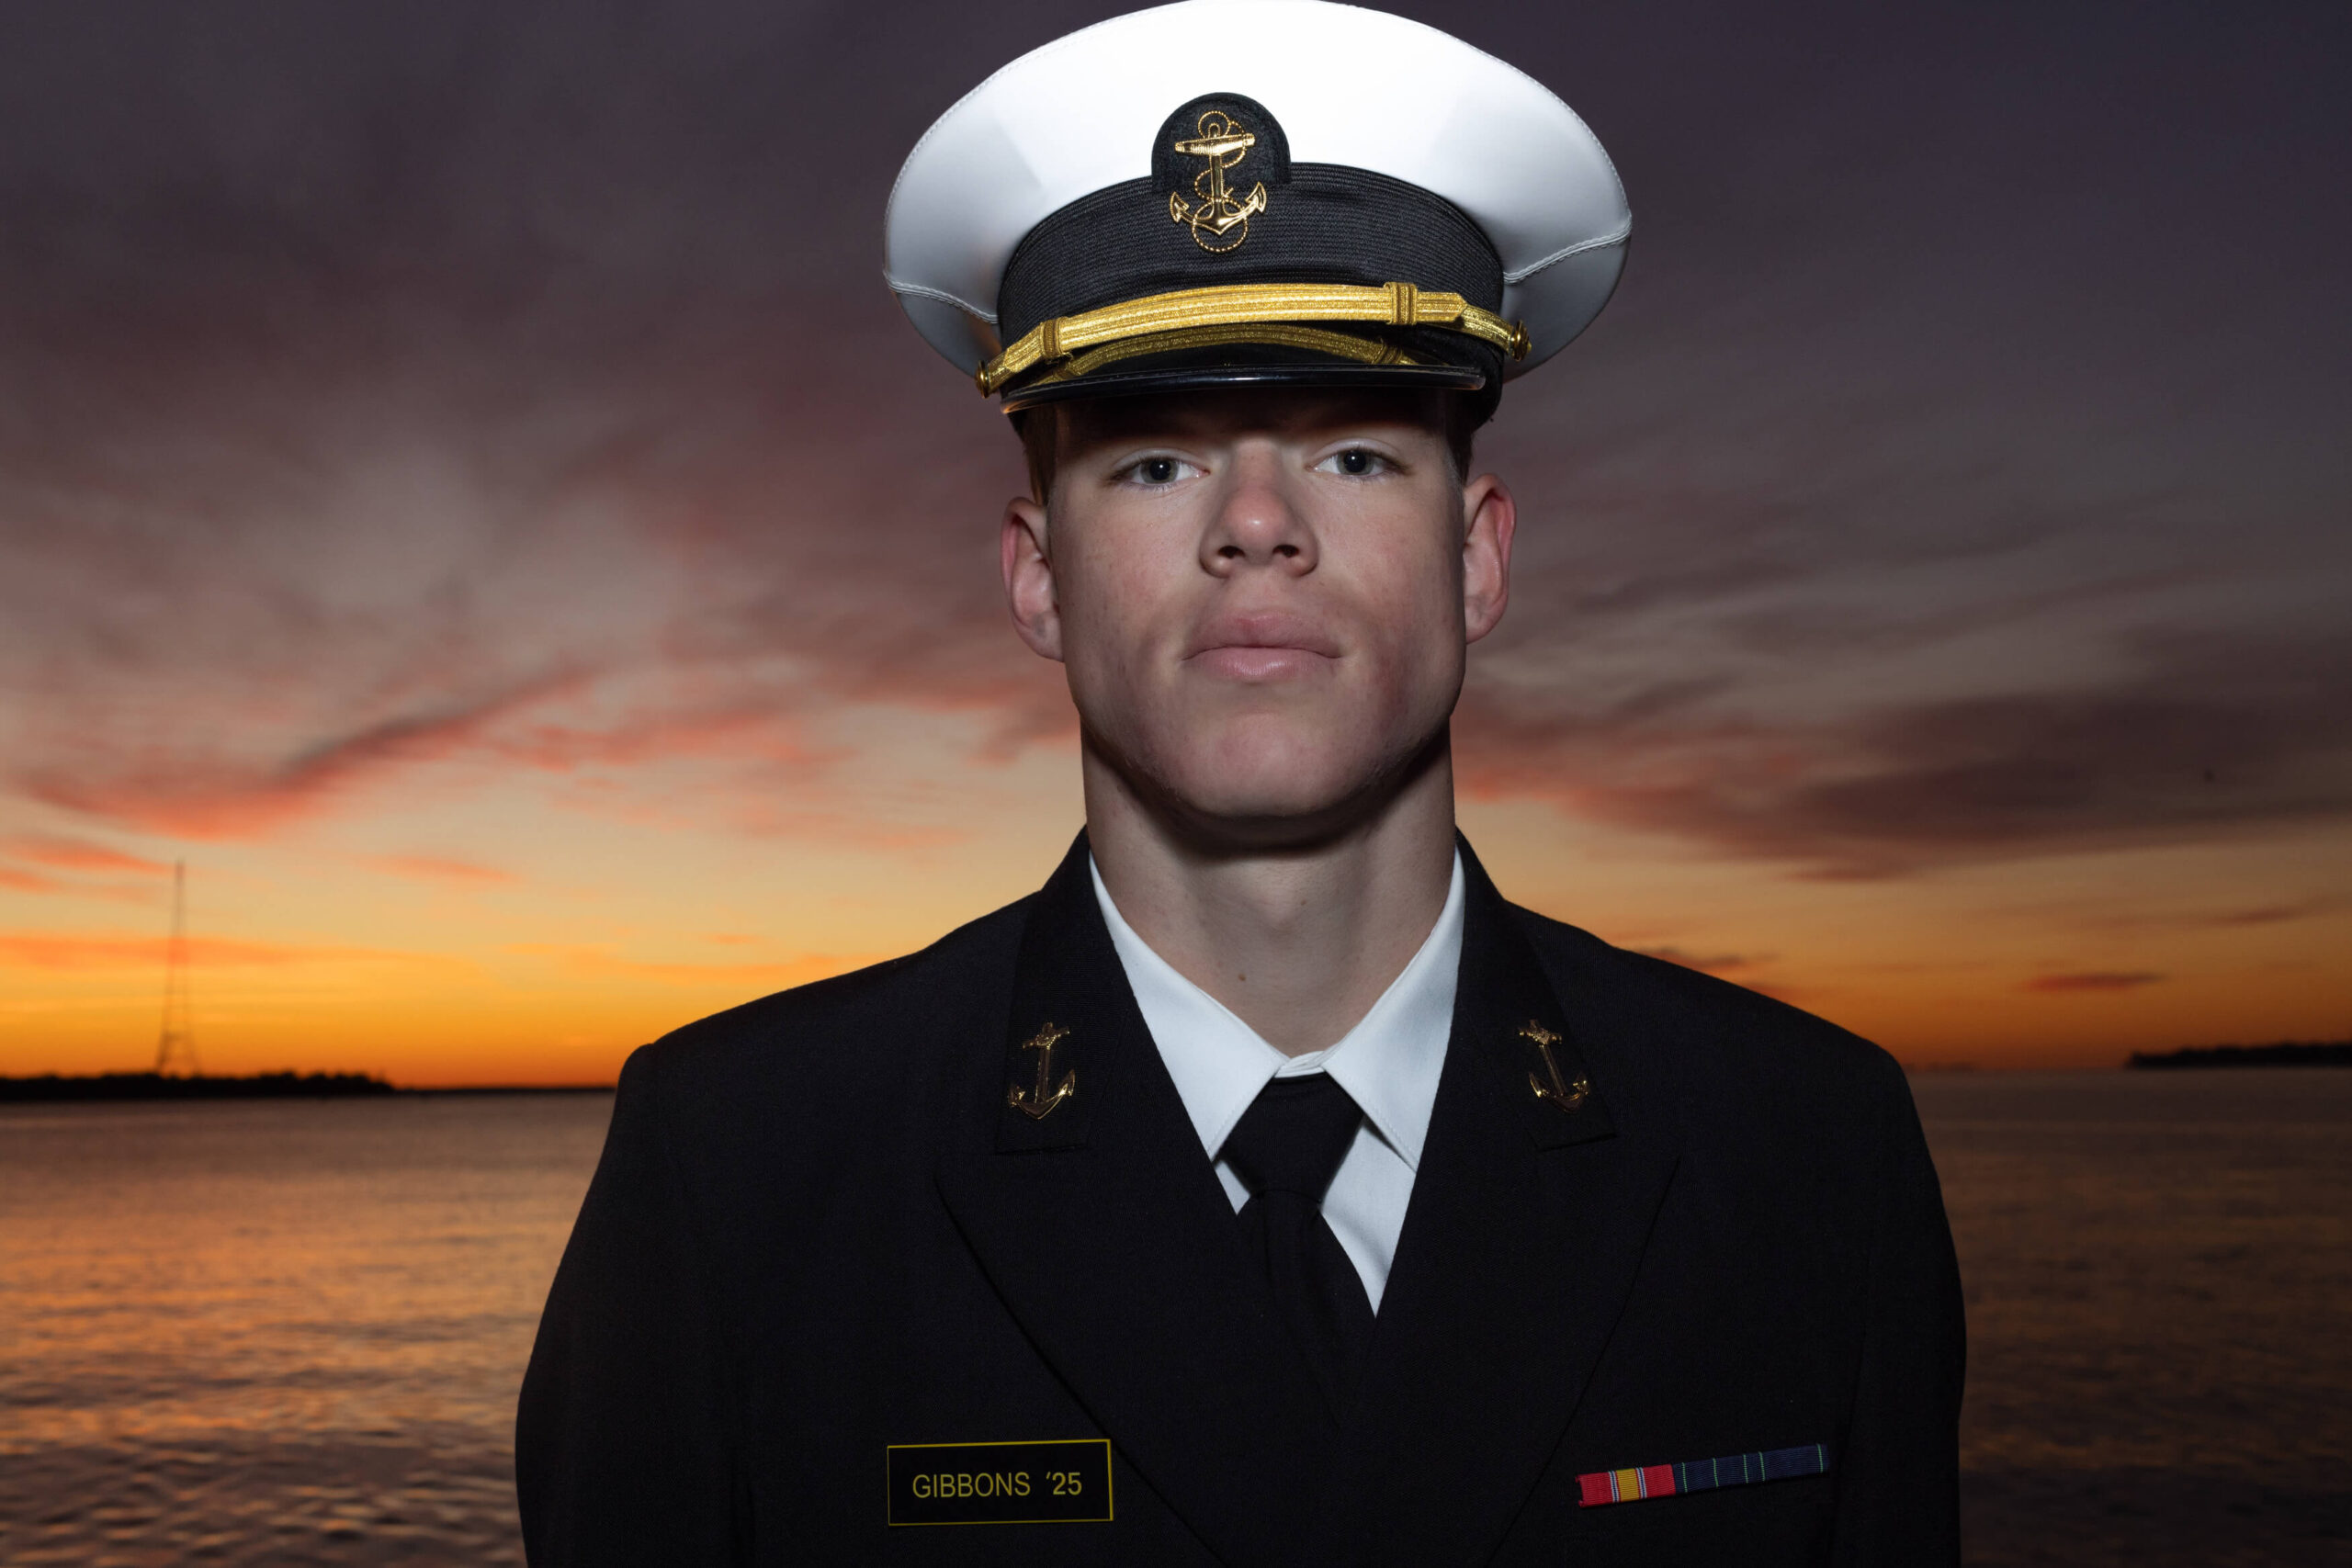 Dramatic sunrise on Chesapeake bay with USNA Midshipman in dress blue uniform.